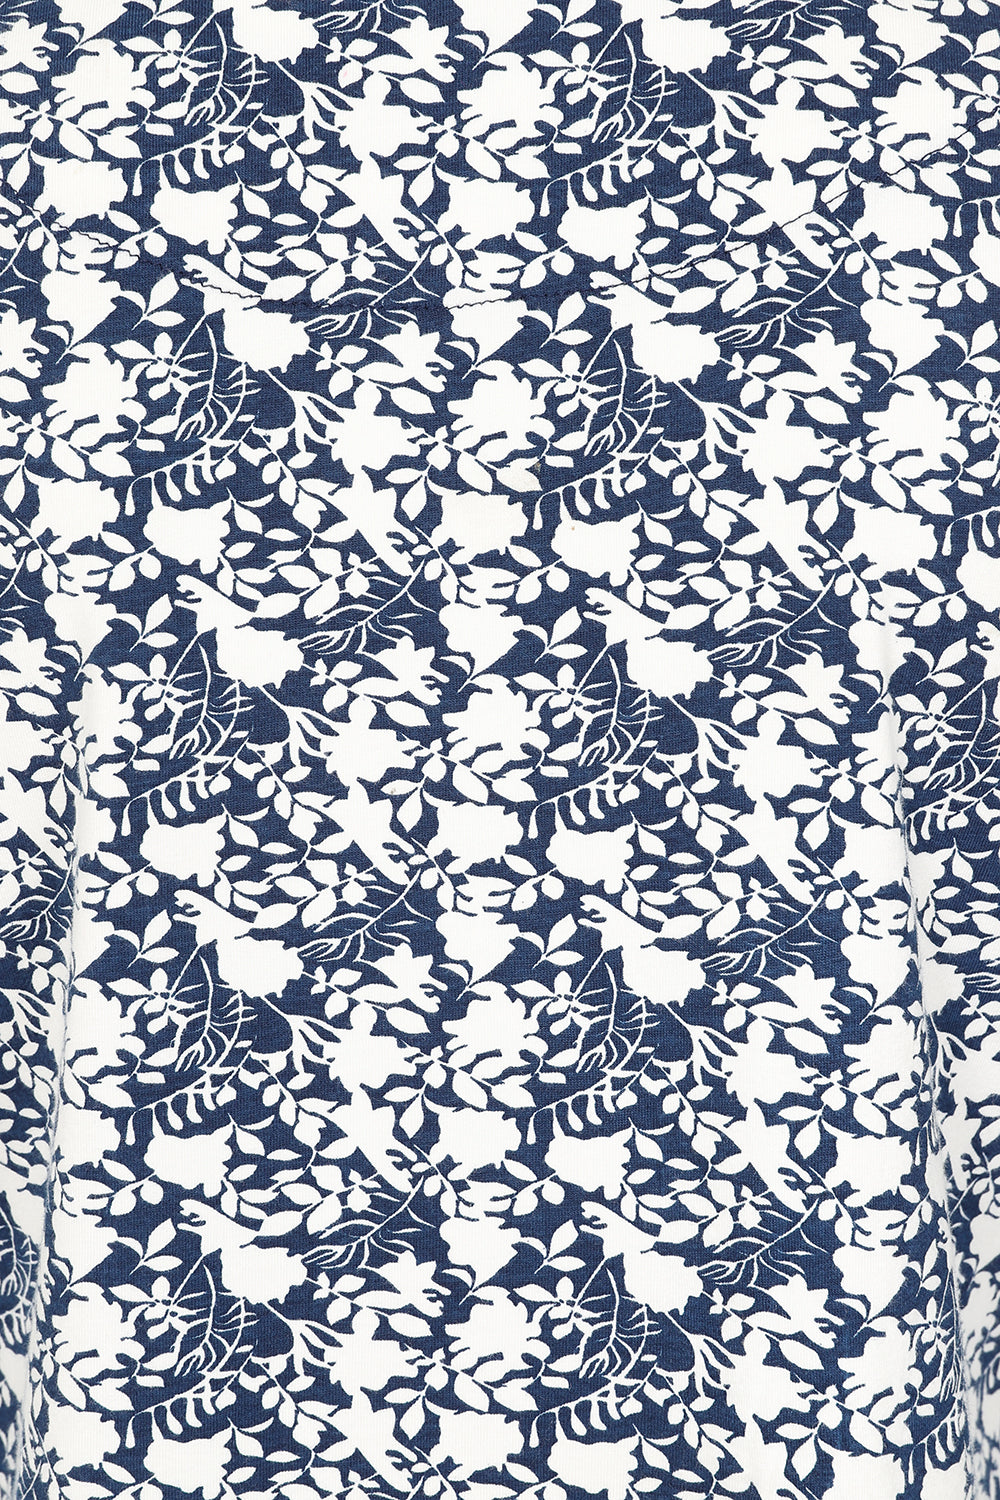 Fern Top - Navy Foliage Print - GOTS Organic Cotton